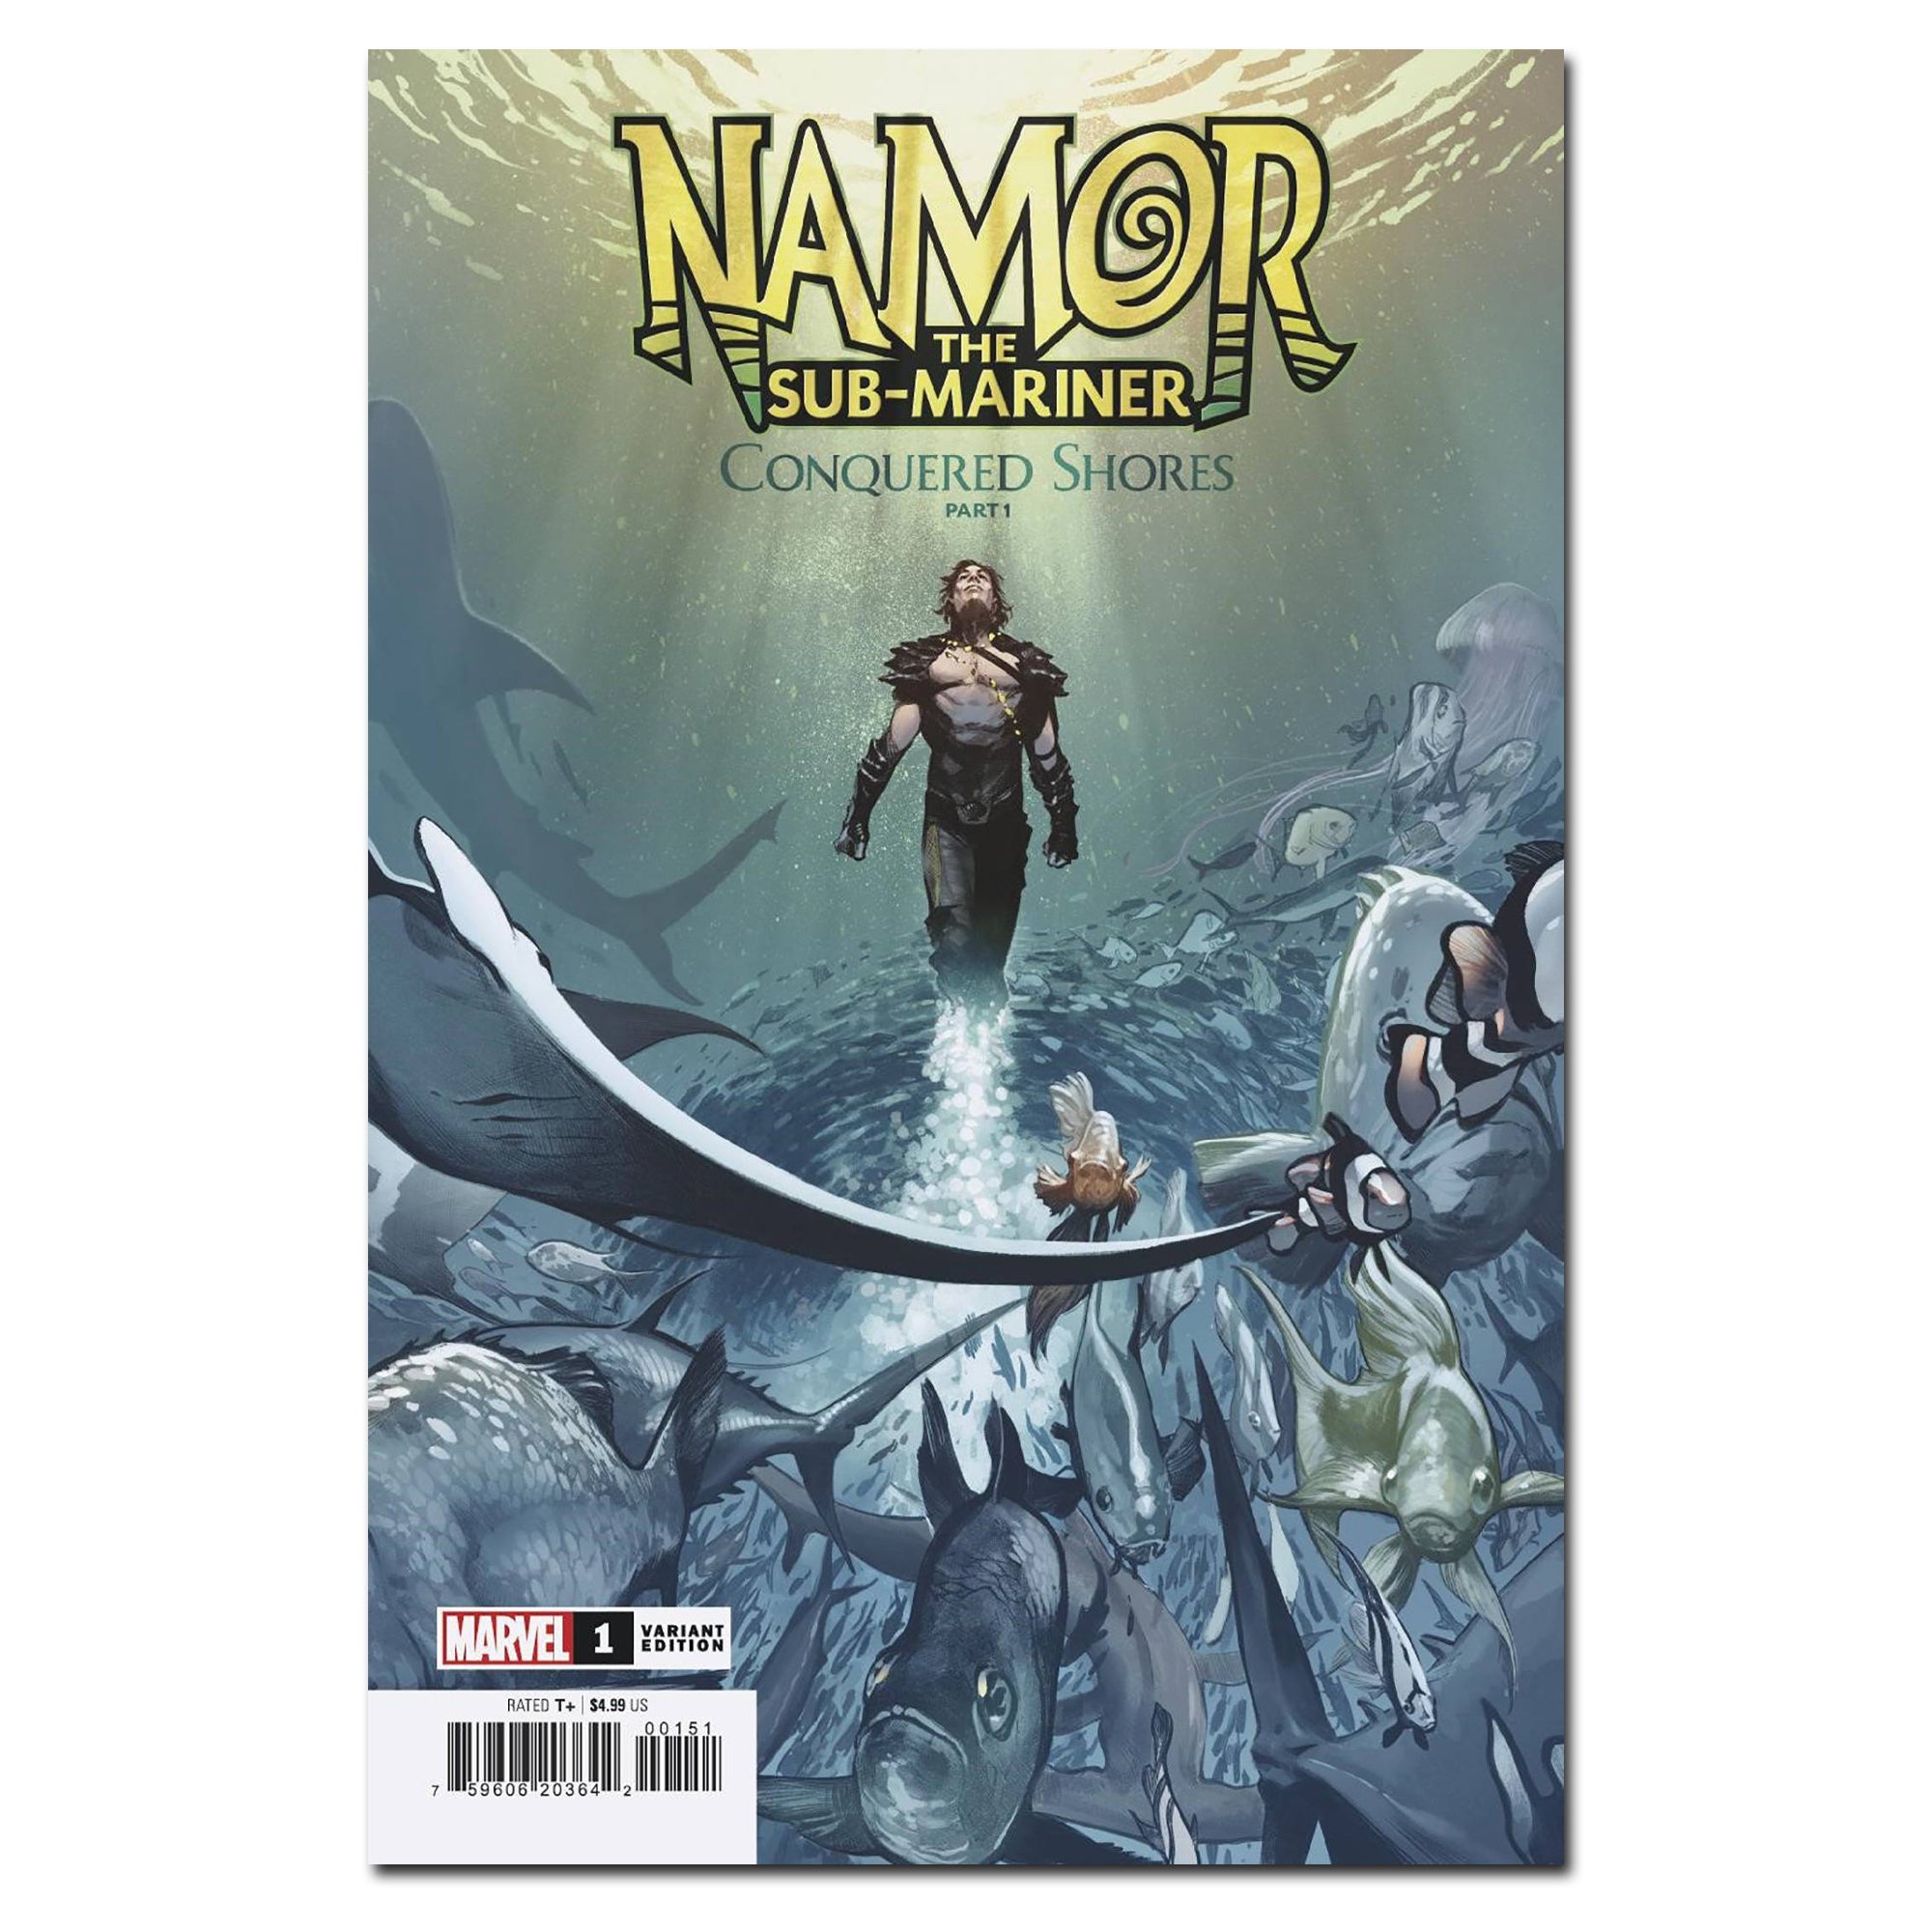 Namor Sub-Mariner Conquered Shores #1 (of 5) Cover Variant LARRAZ FINALSALE